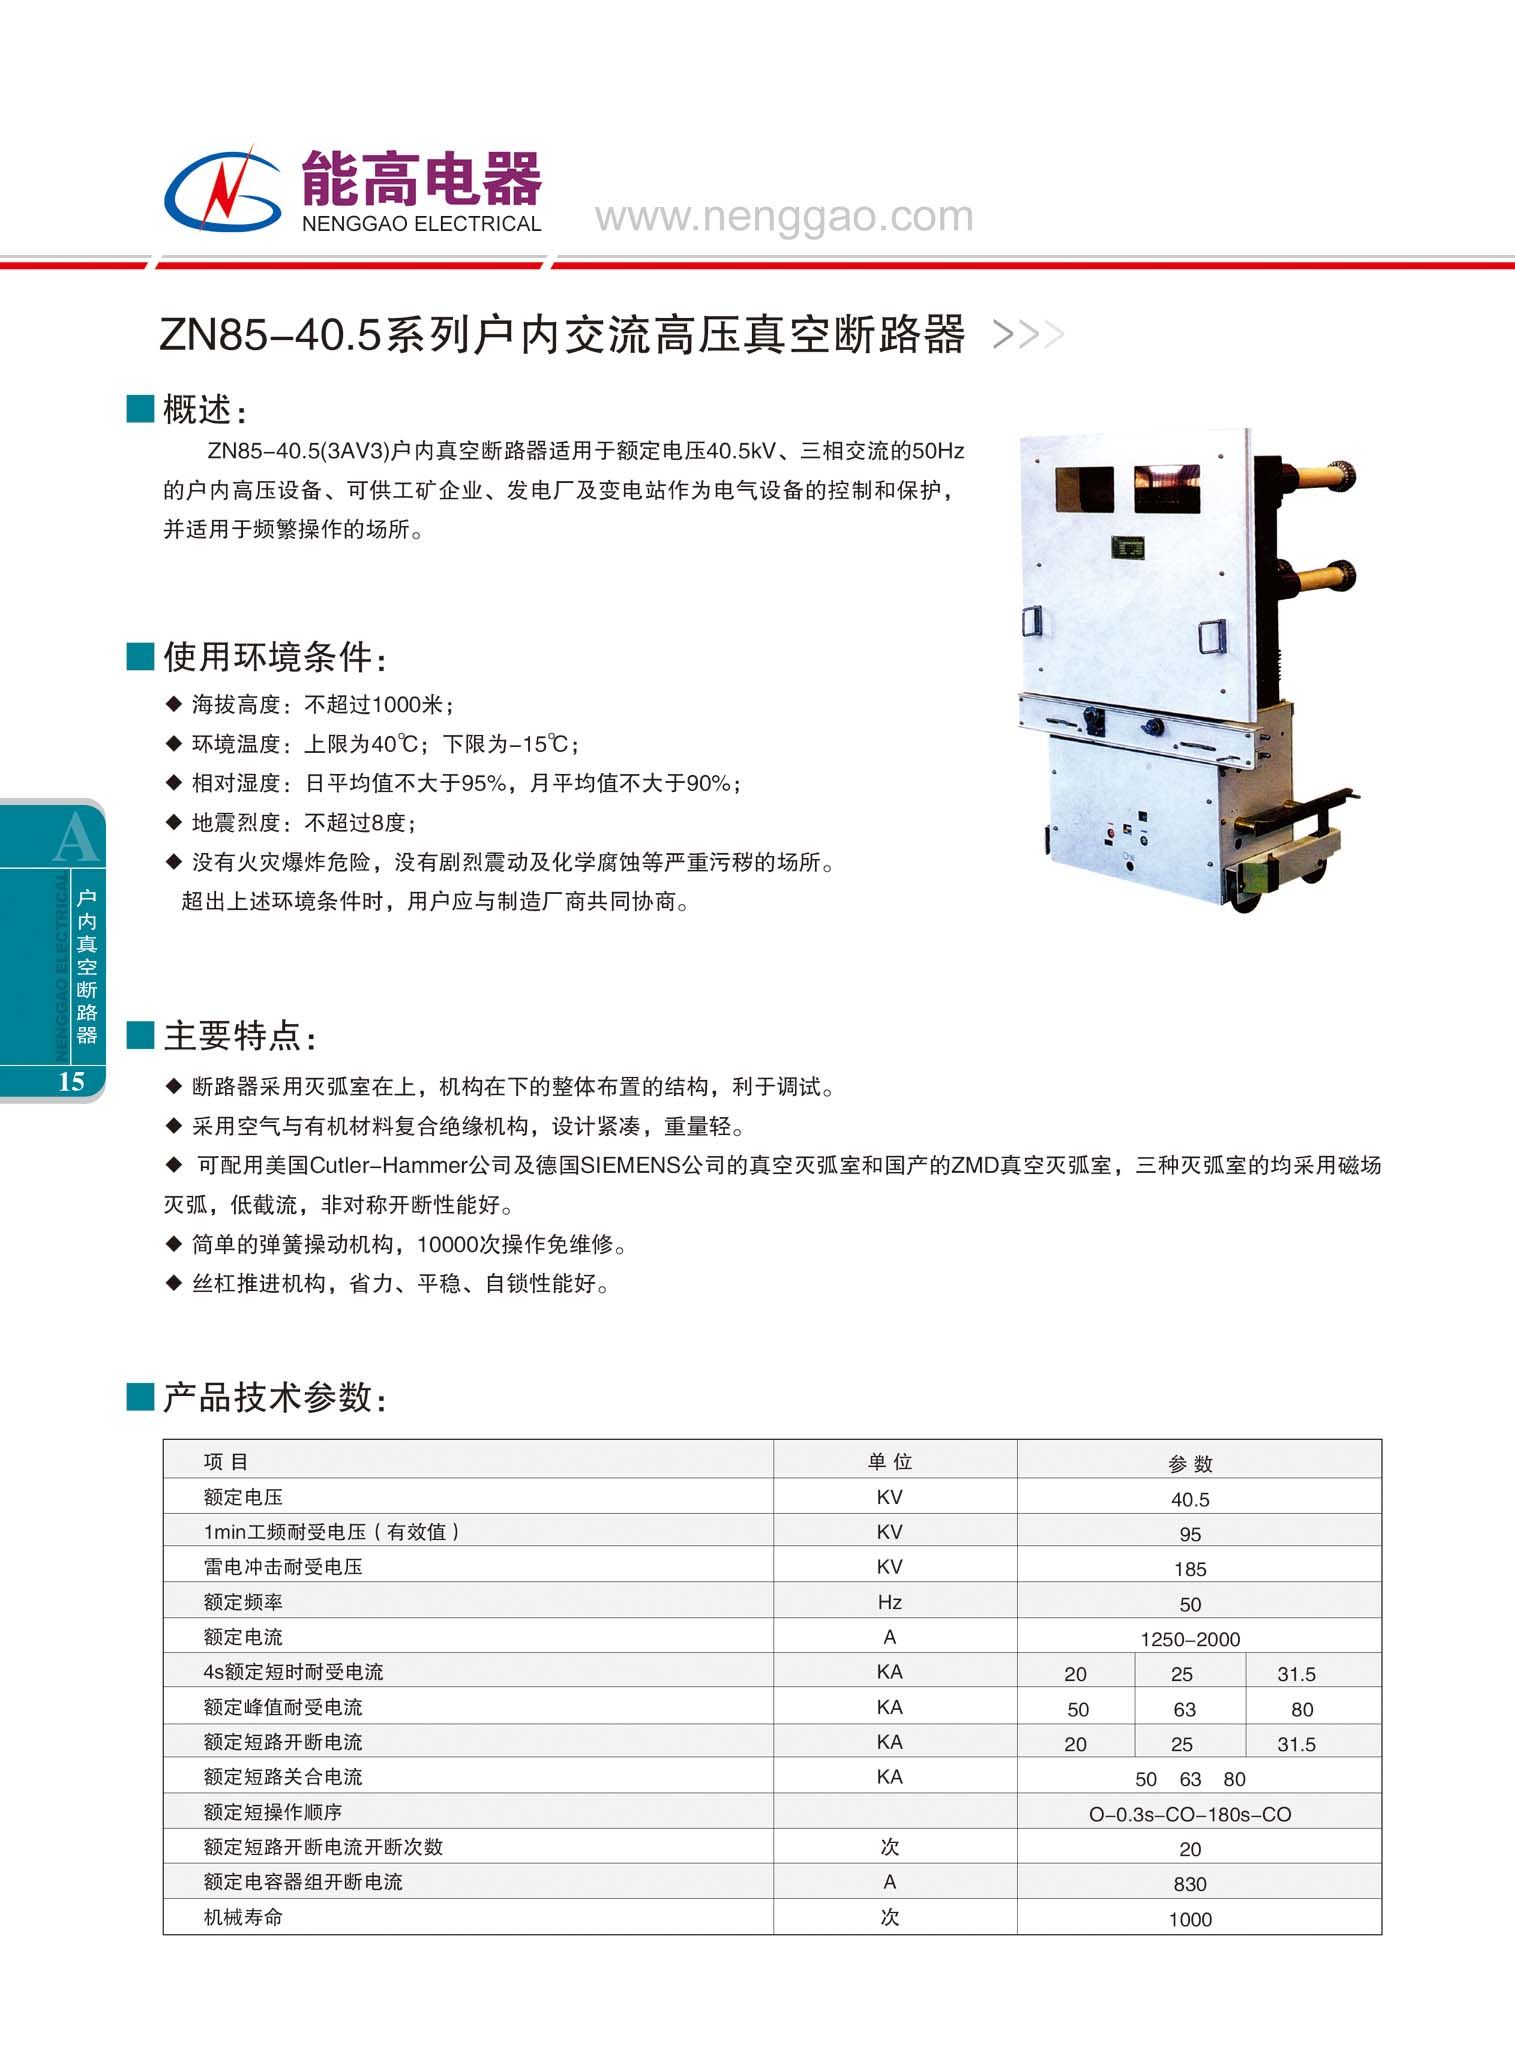 ZN85-40.5系列户内交流高压真空断路器(图文)